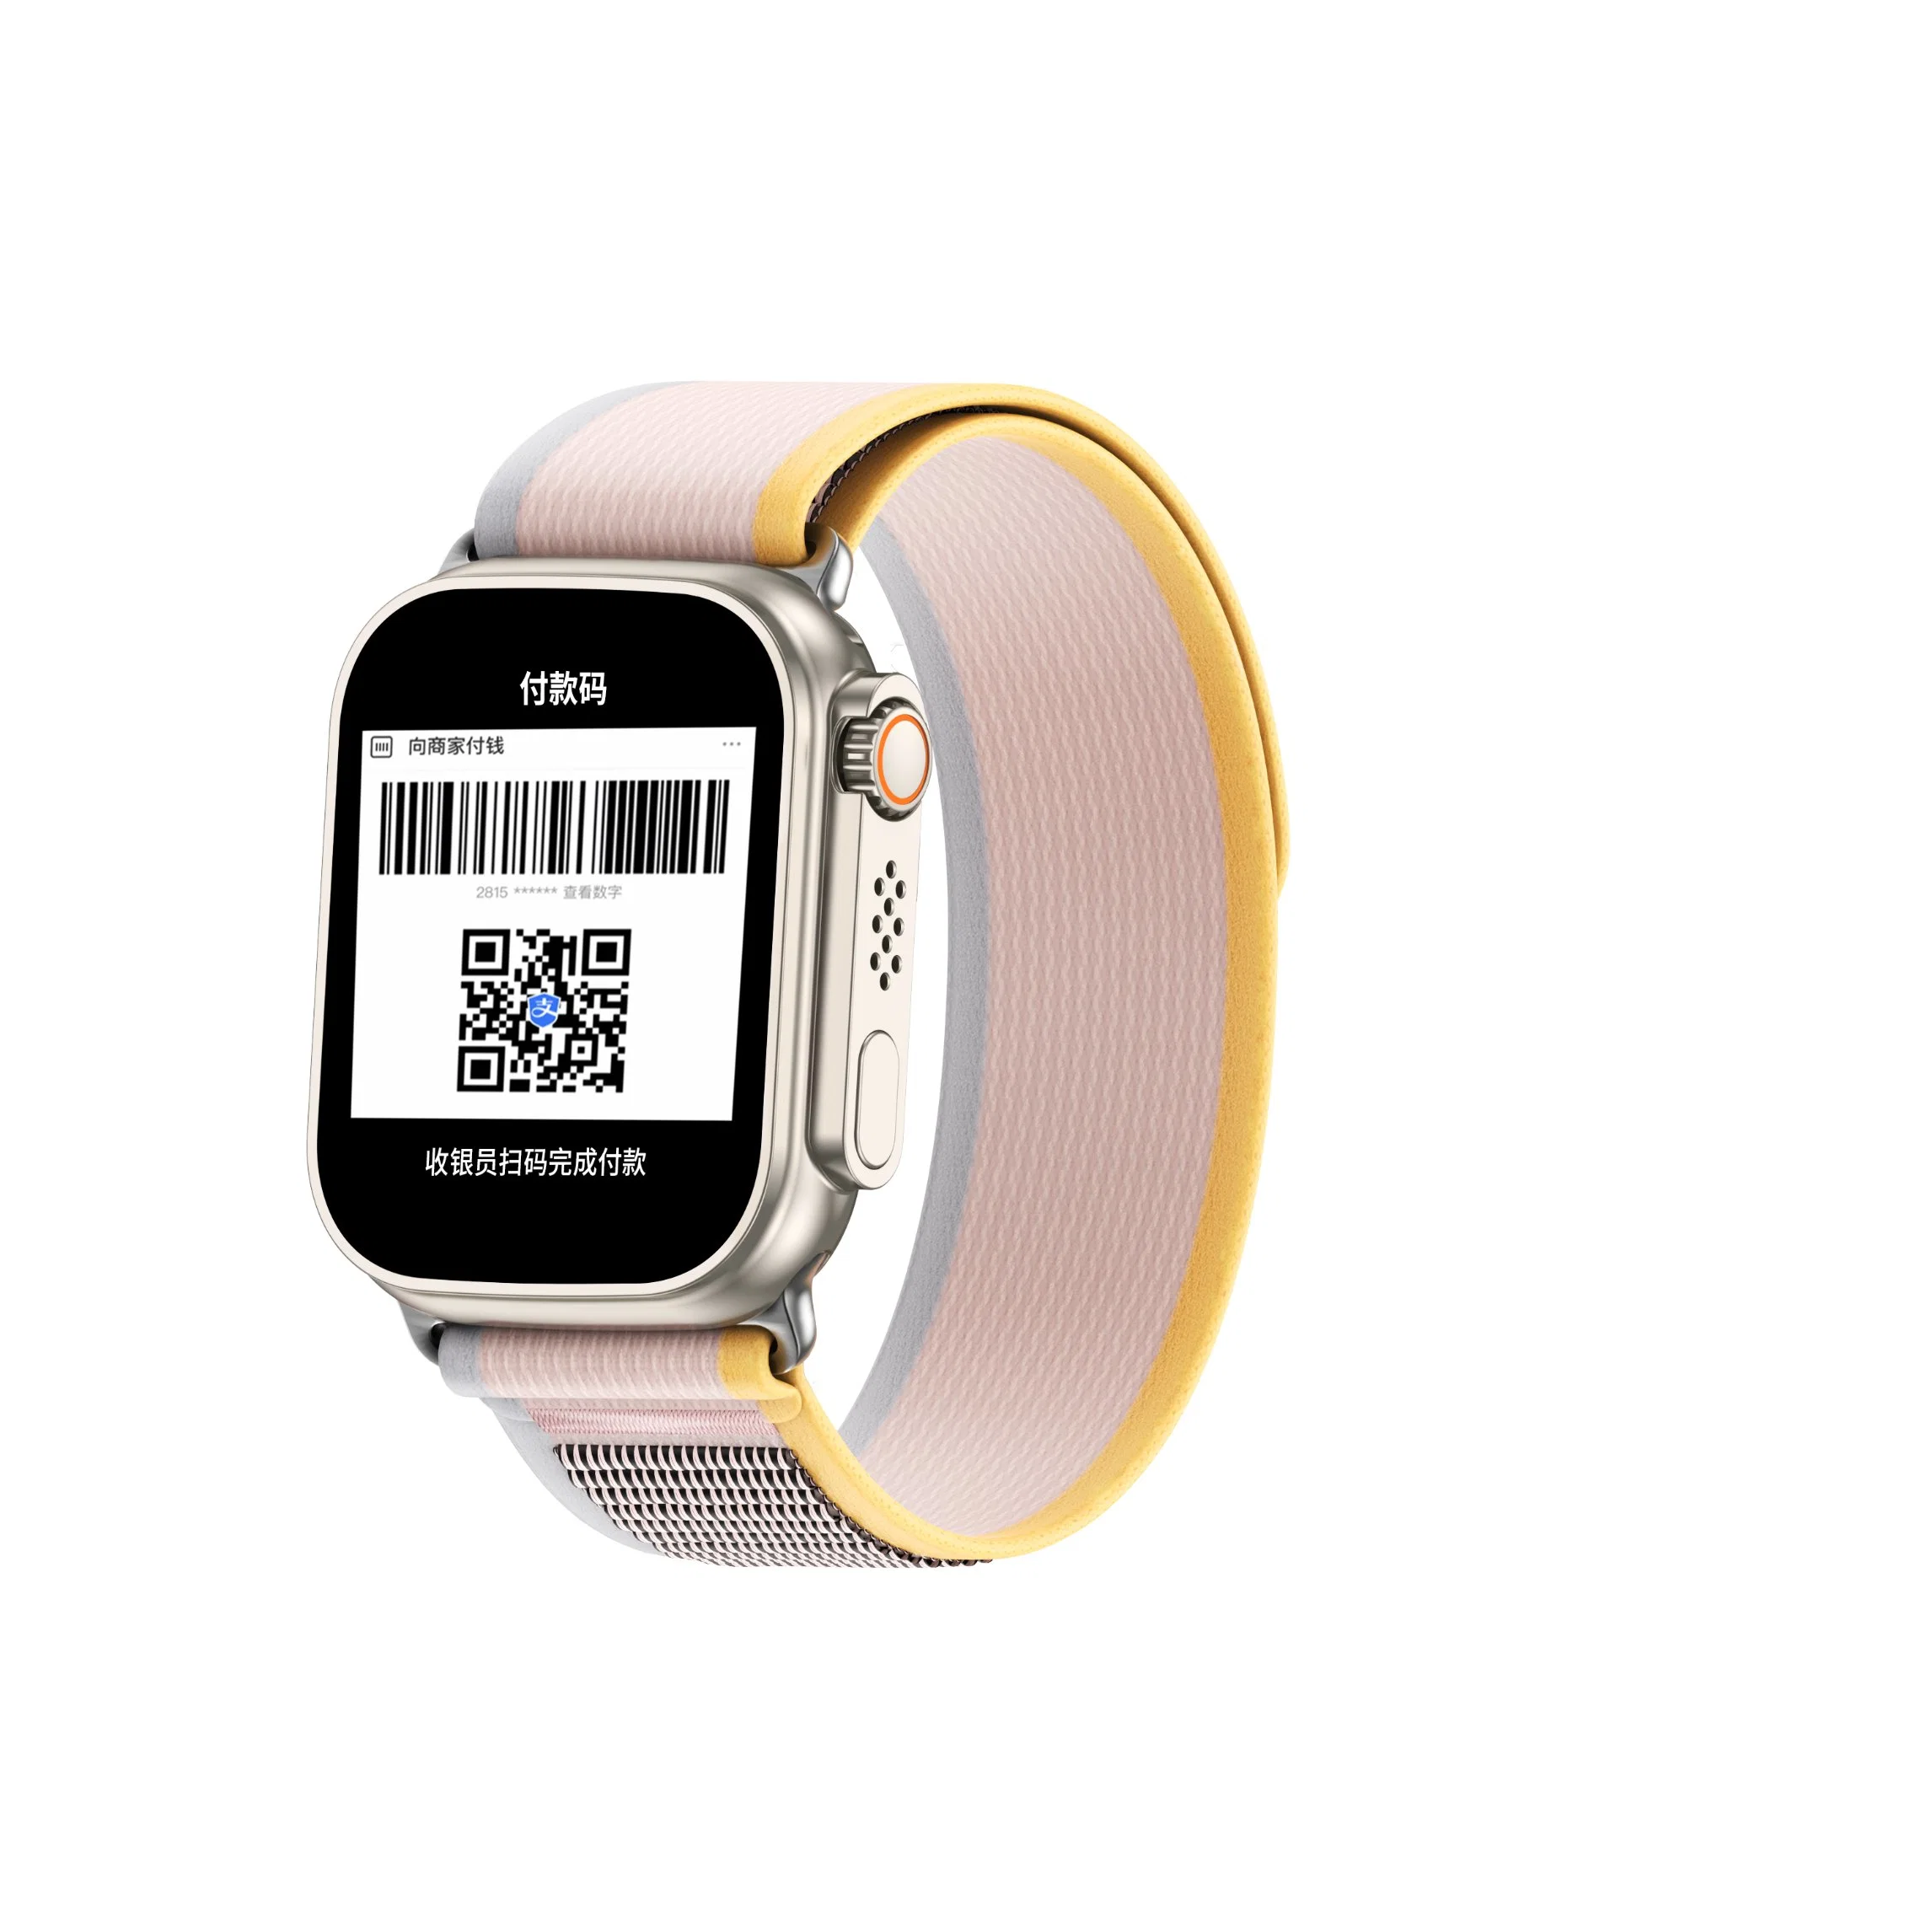 Waterproof Square Smartwatch Waterproof IP67 Fitness Smart Watch Smart Bracelet Event 4G LTE Mobile Watch